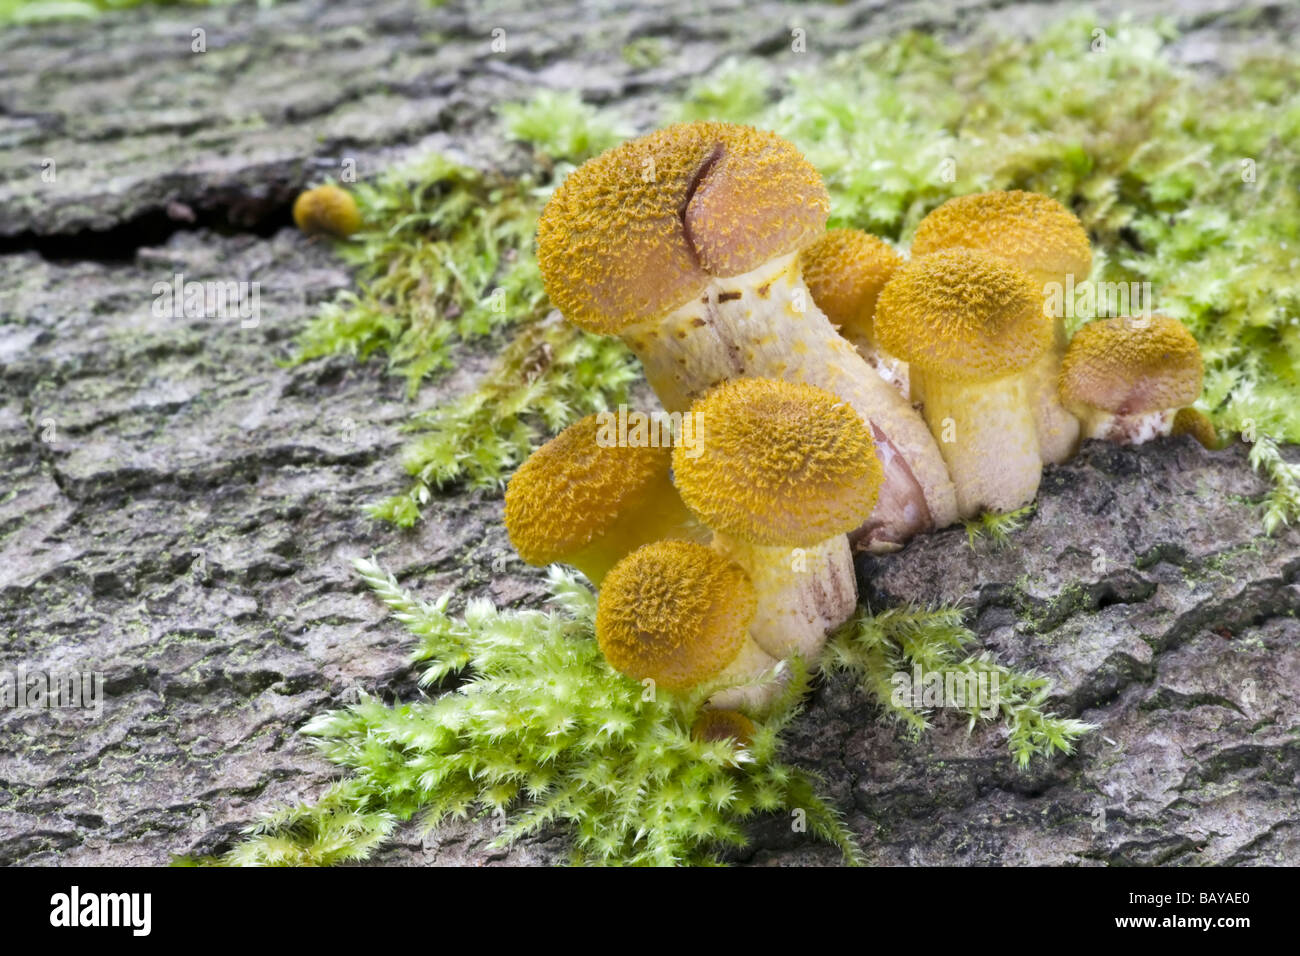 Honig oder Boot Spitze Pilz Stockfotografie - Alamy